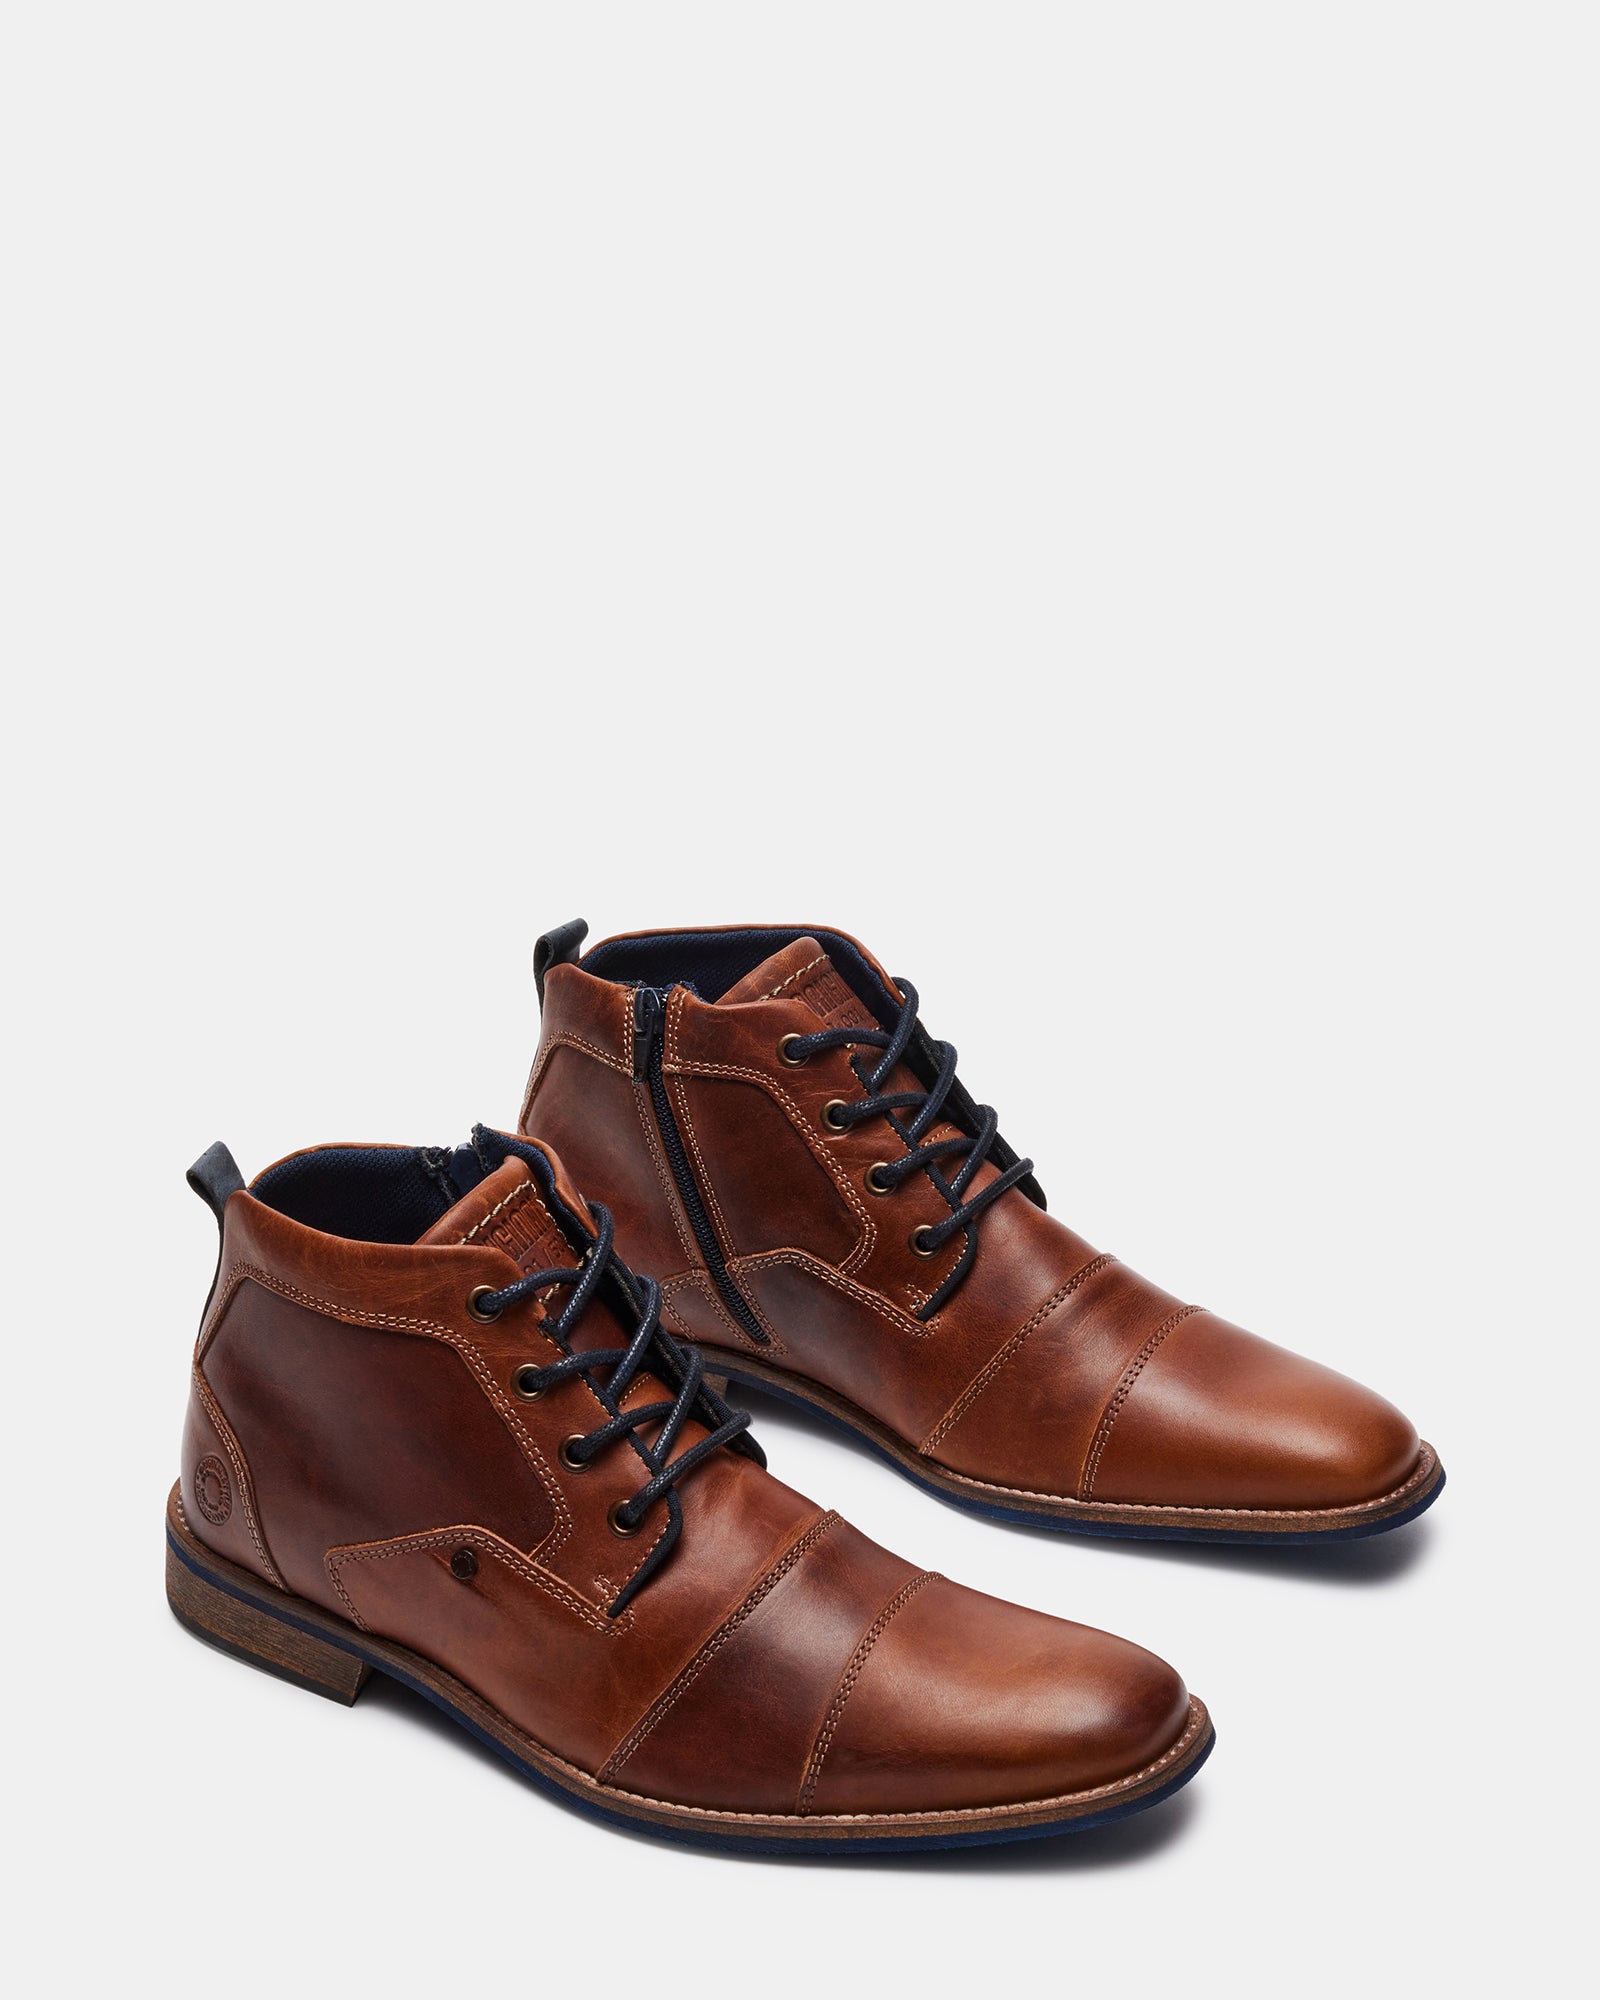 KRAMERR Tan Leather Chukka Boots | Designer Tan Leather Boots for Men ...